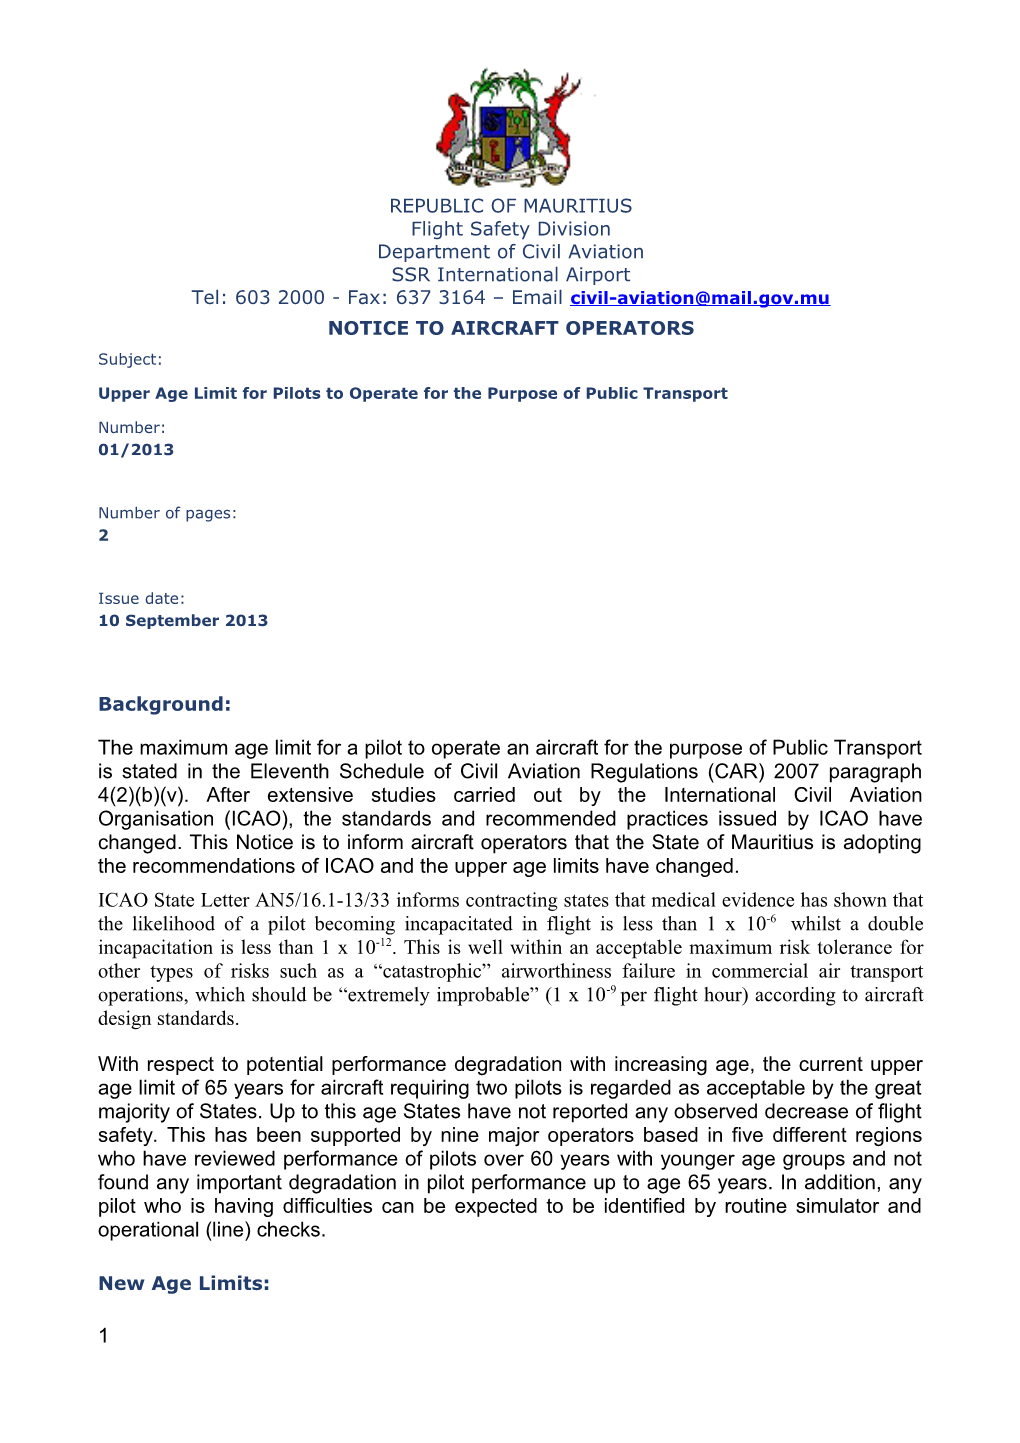 DCA Notice to Aircraft Operators 01/2013